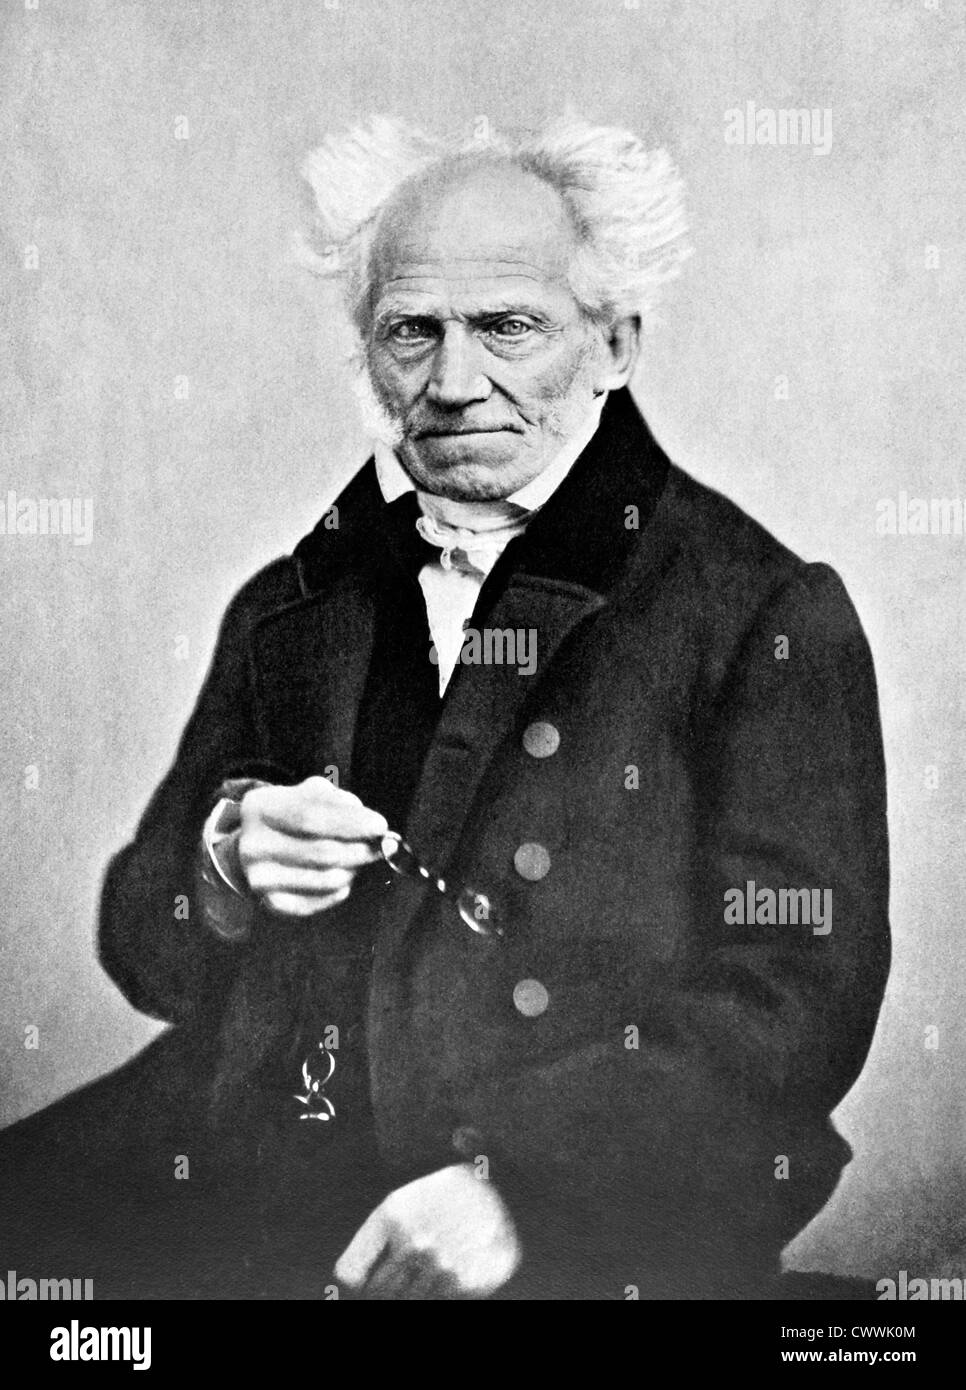 Arthur Schopenhauer (1788-1860) on antique print from 1898. German philosopher. Stock Photo